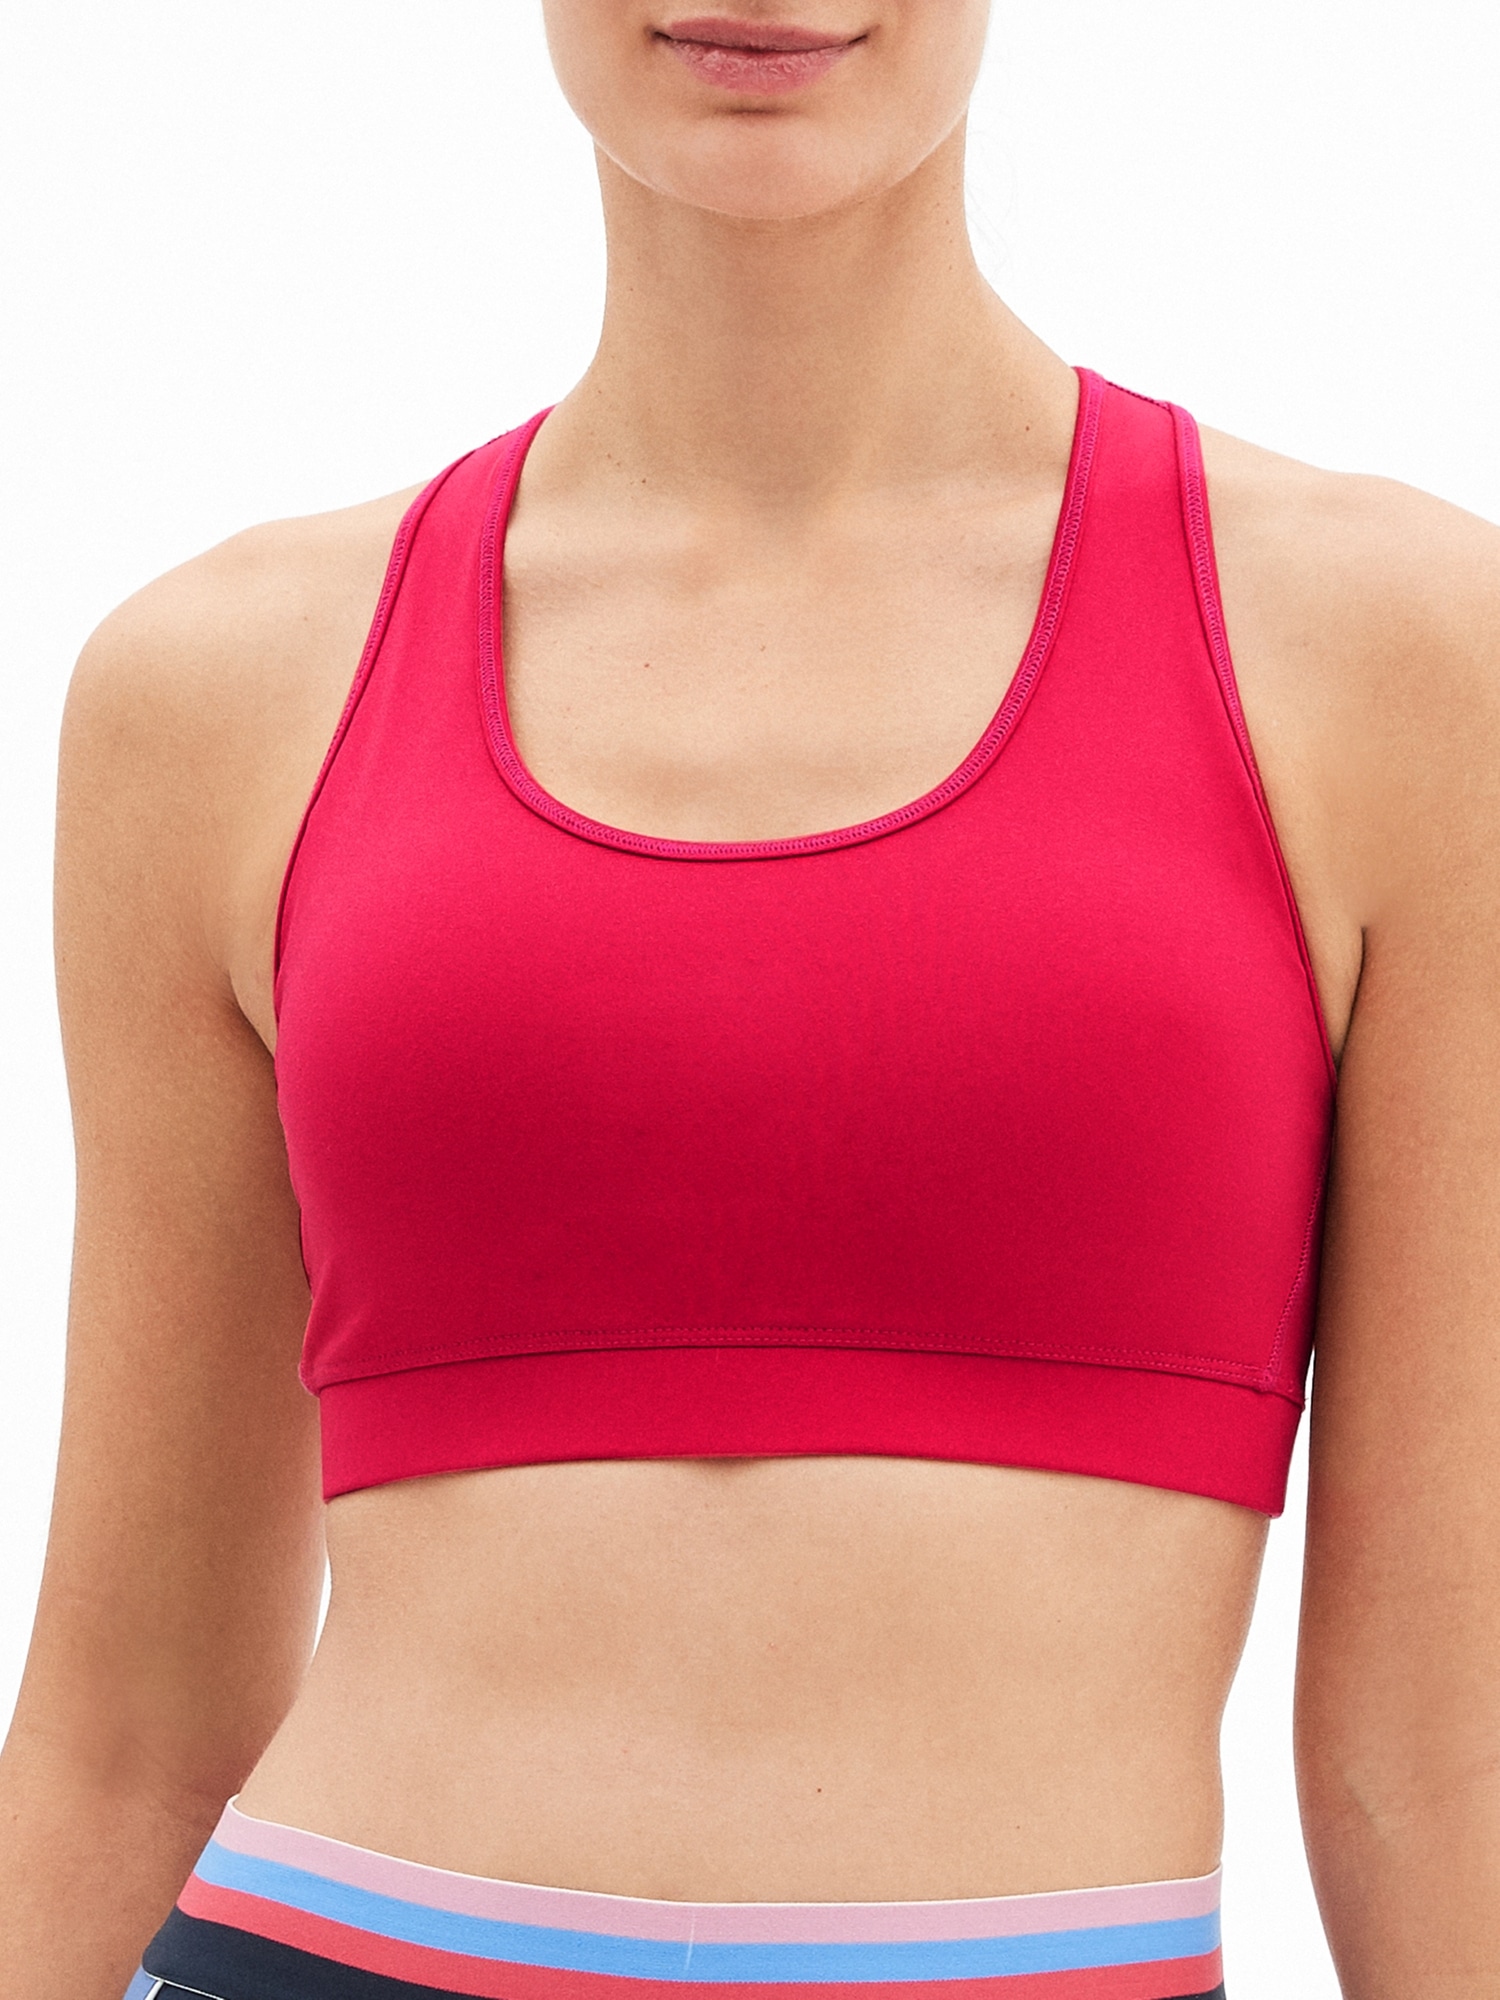 Sport Bra by Gap  Hot pink sports bra, Gap sports bra, Purple sports bras